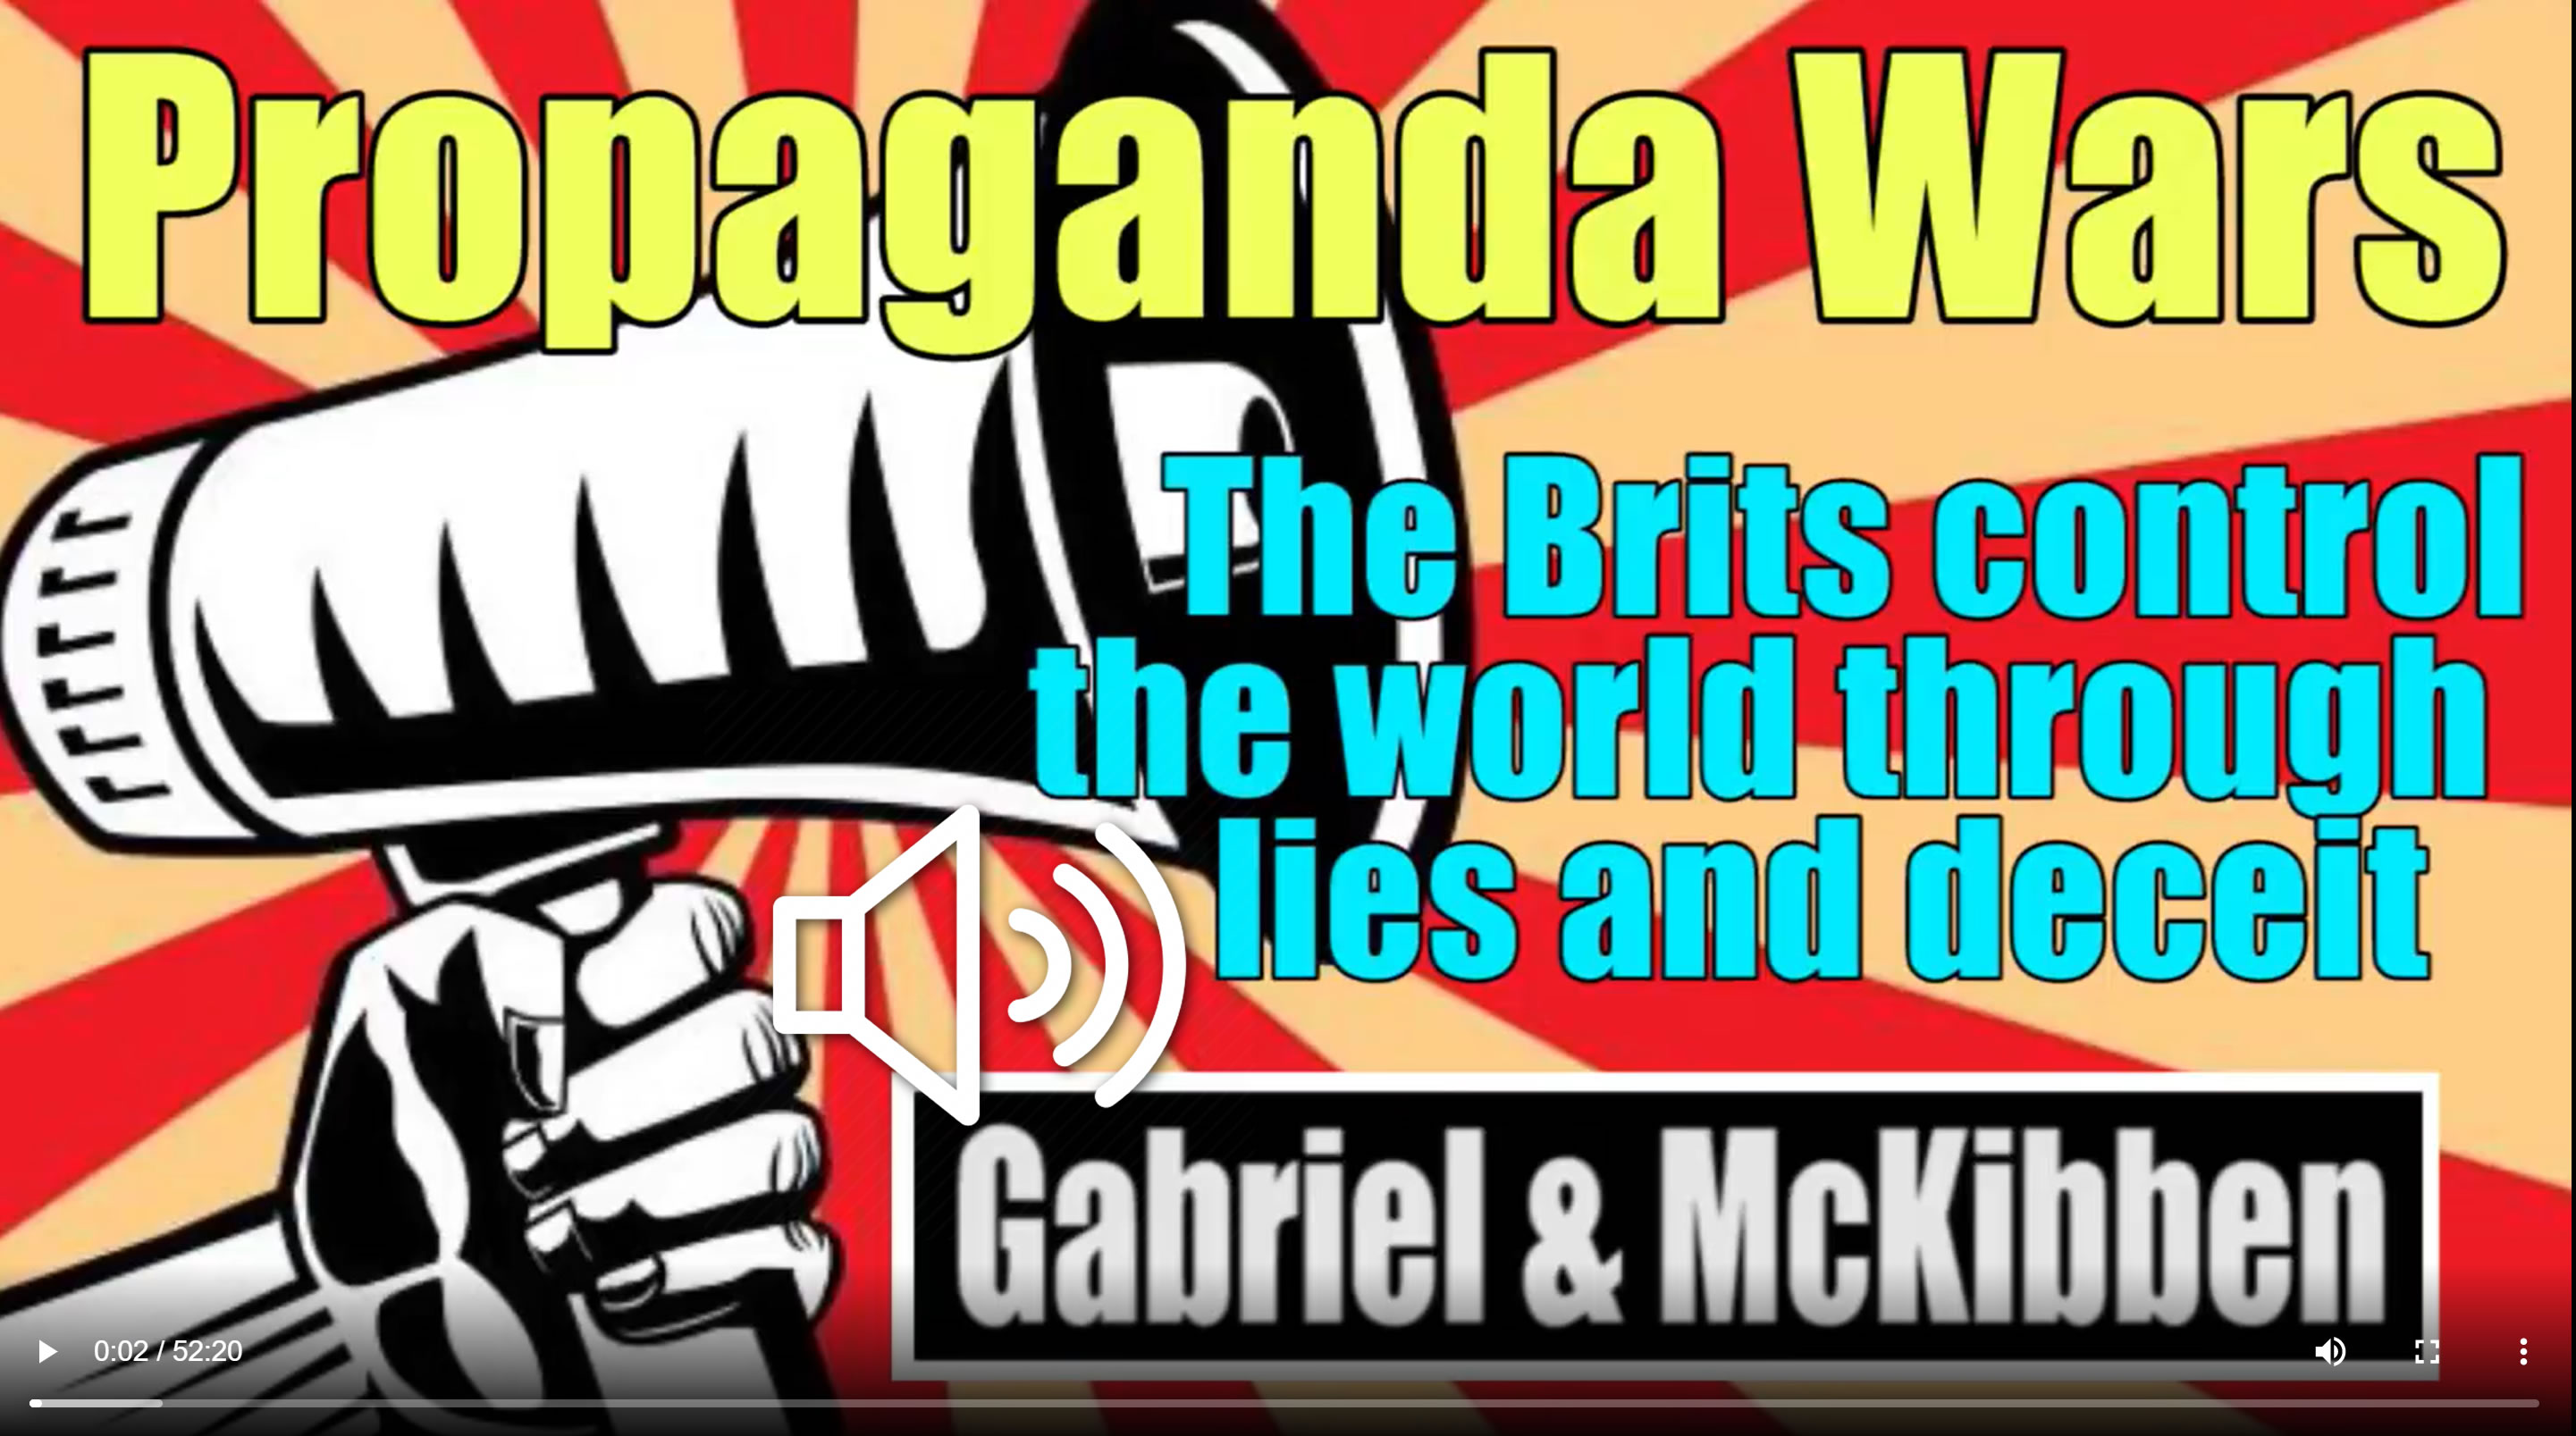 Gabriel, McKibben. (Jan. 04, 2019). 100 Years of British Propaganda and War is ENOUGH!! American Intelligence Media, Americans for Innovation.